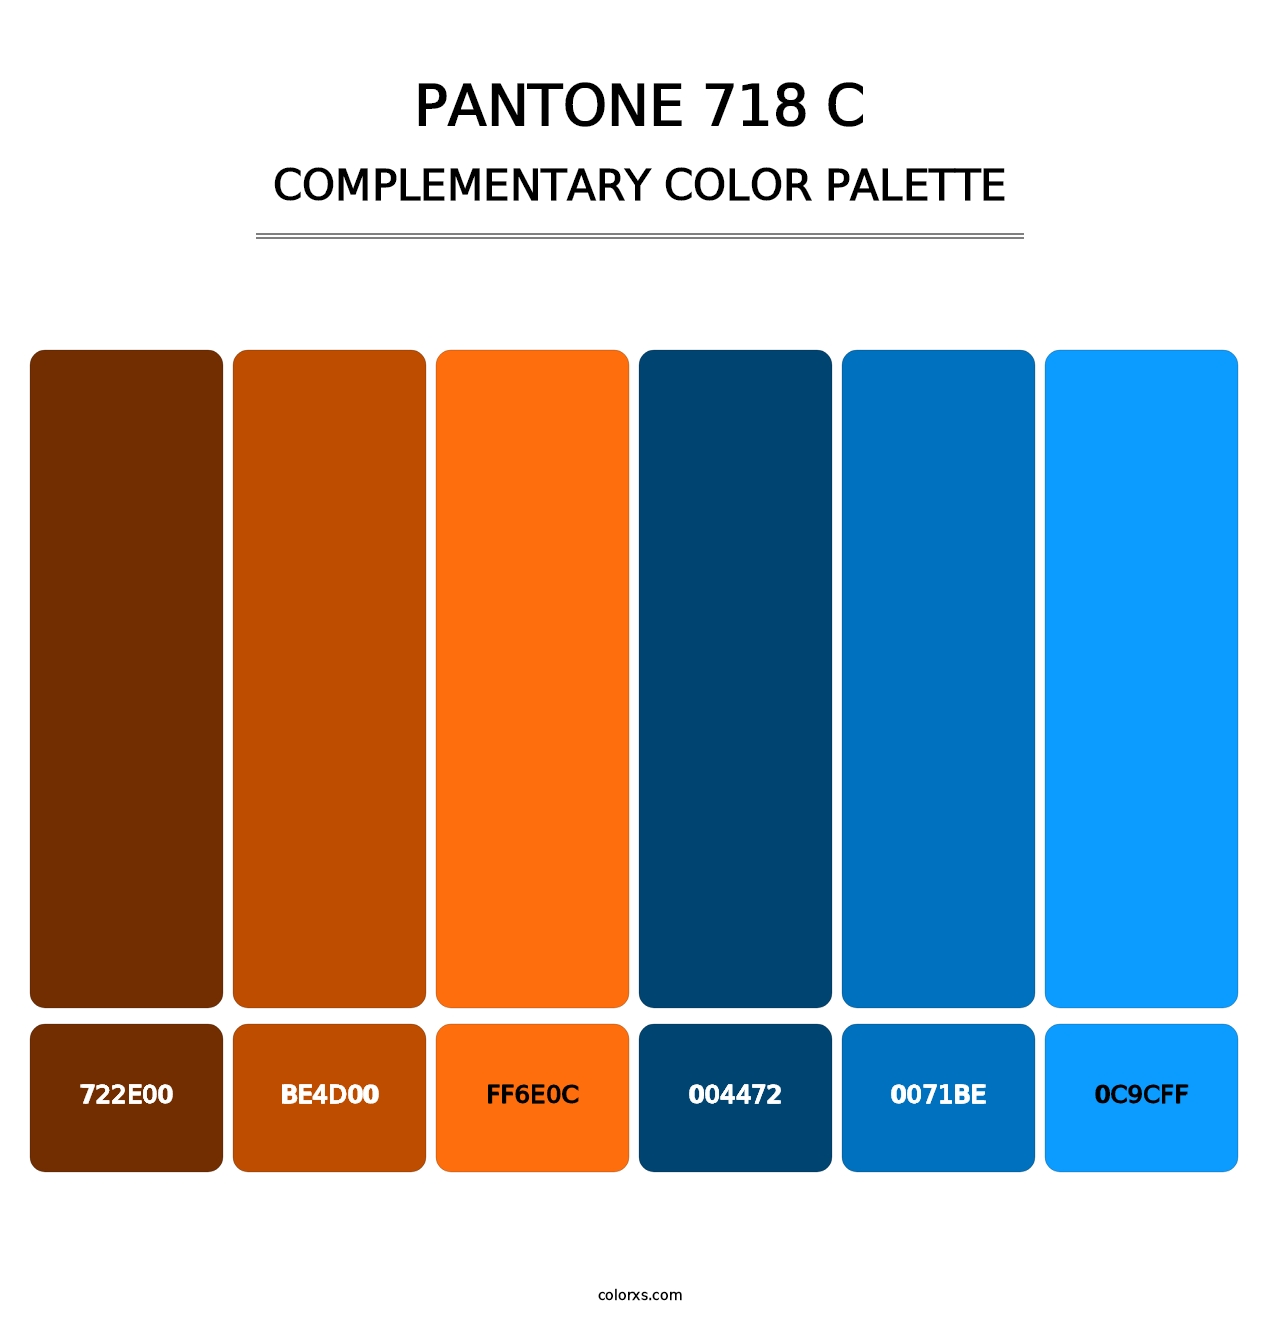 PANTONE 718 C - Complementary Color Palette